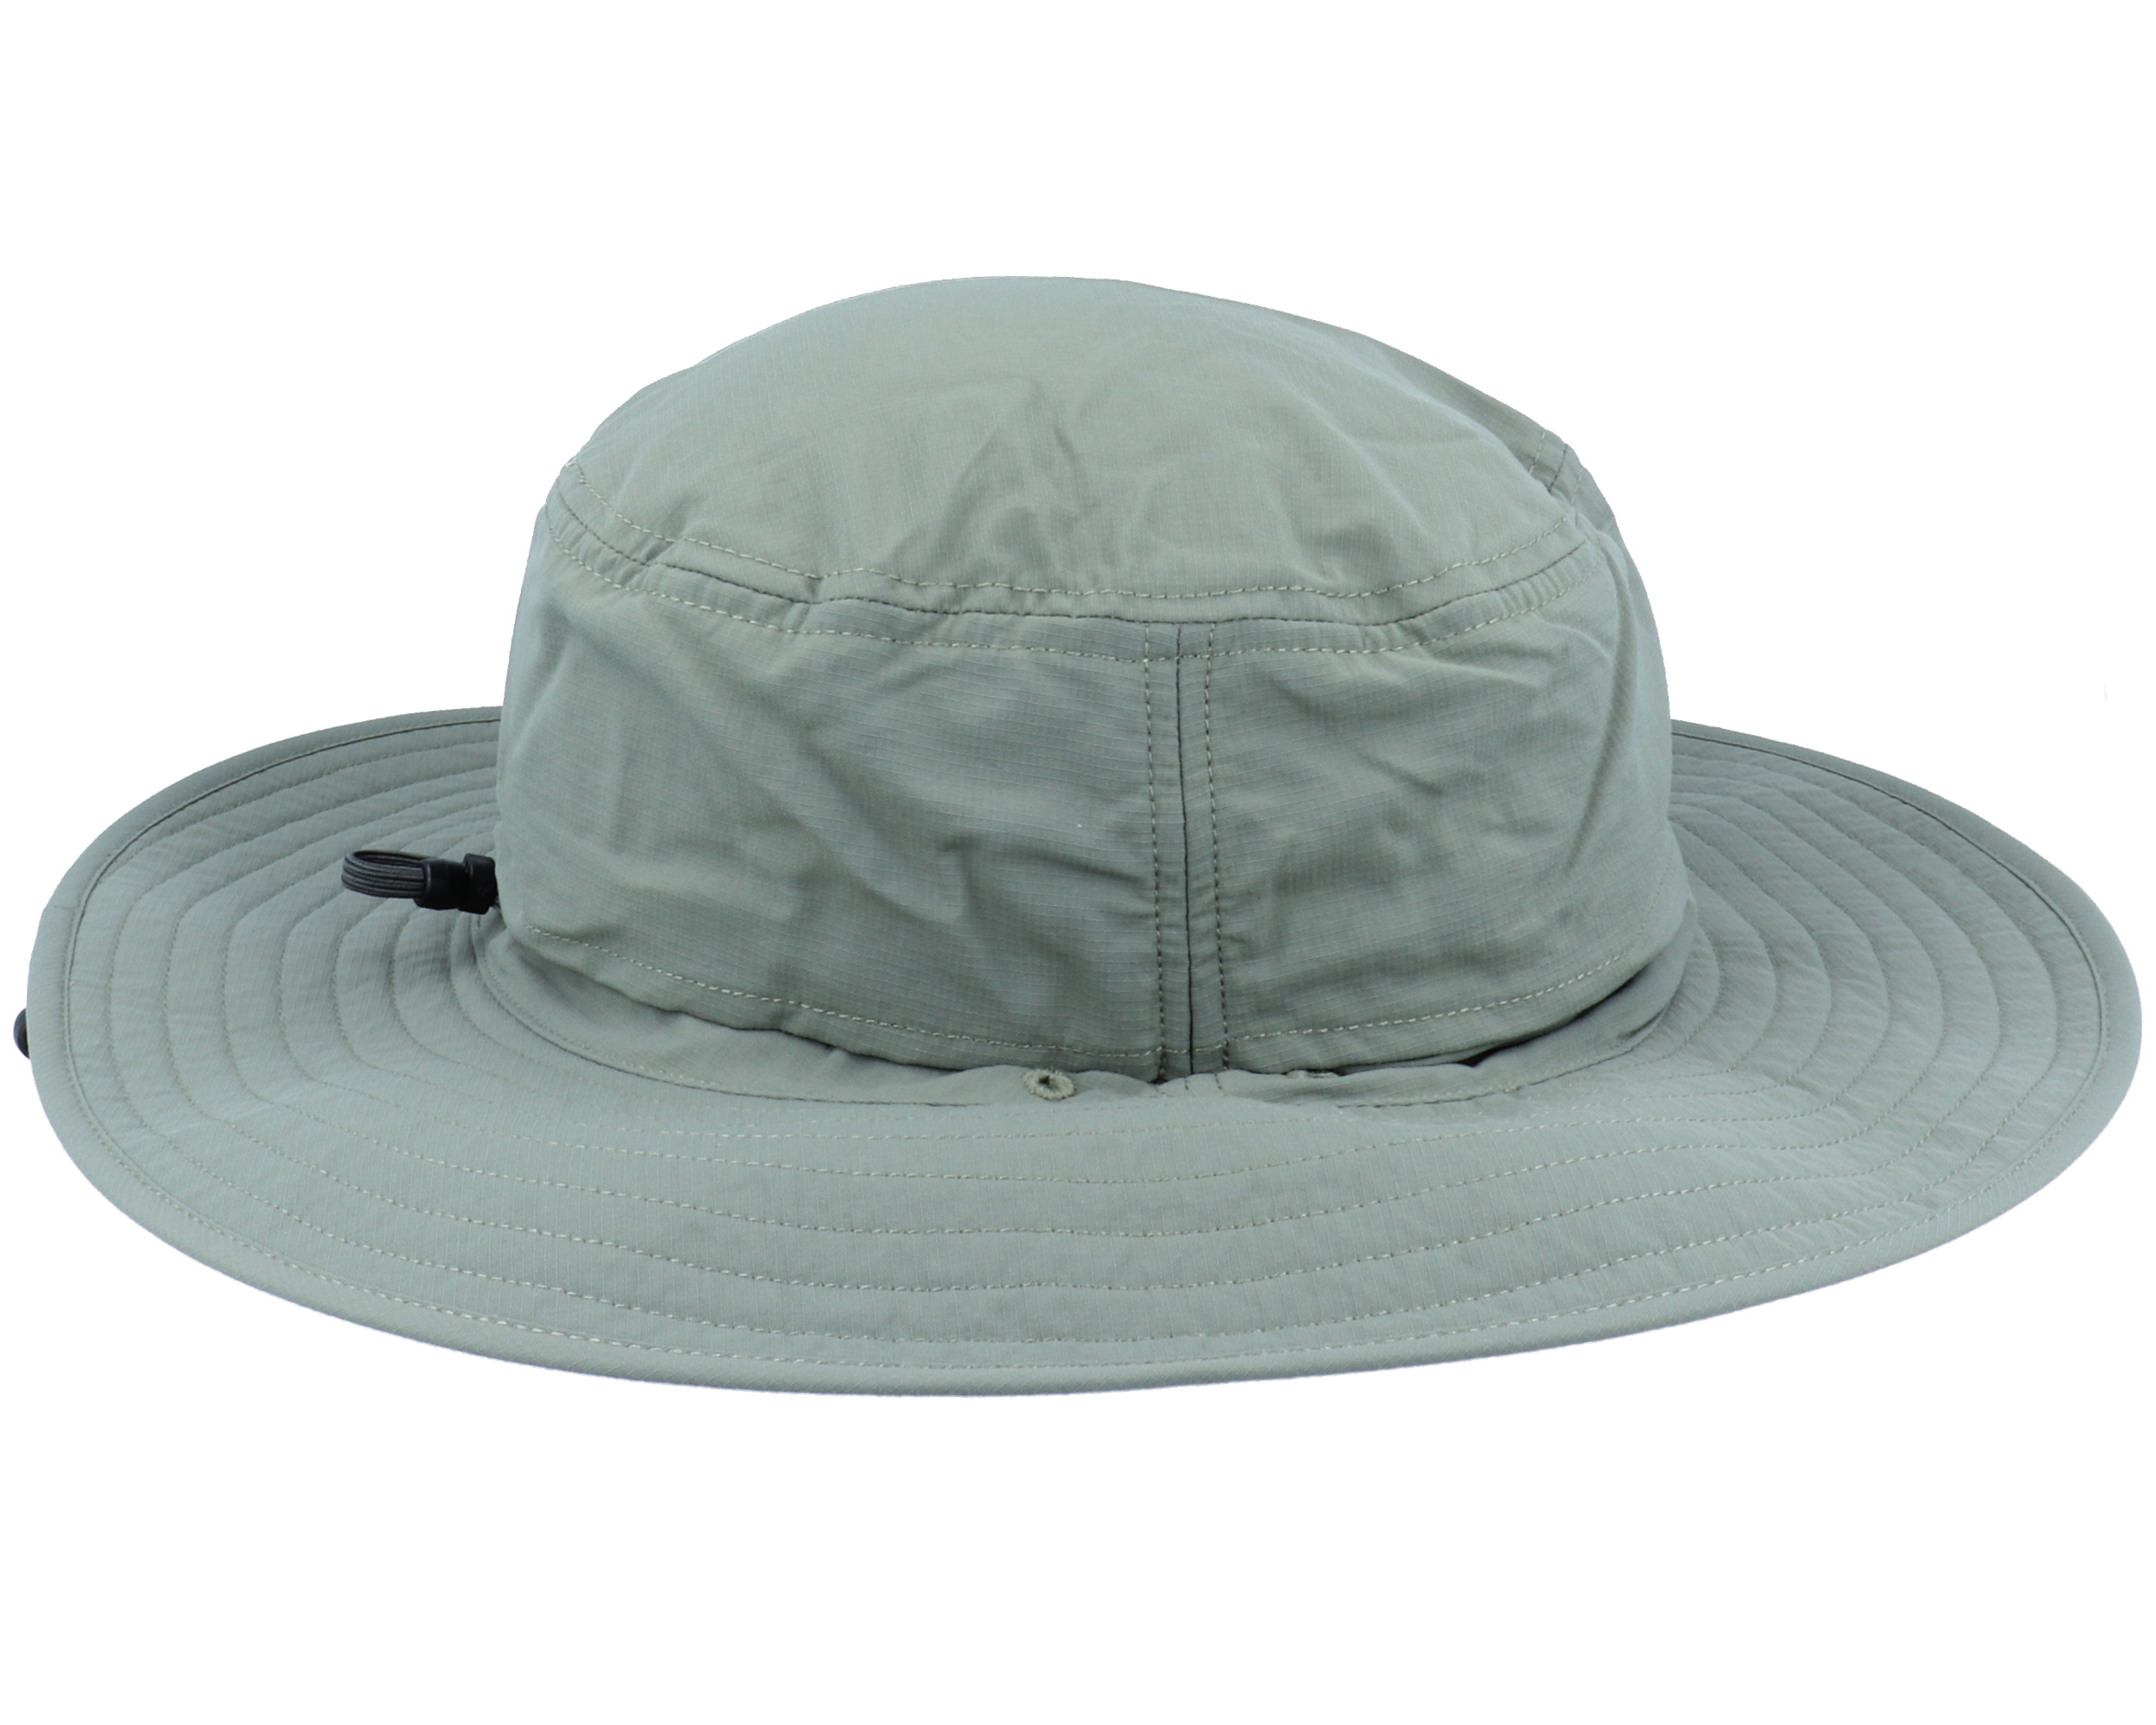 Horizon Breeze Brimmer Hat - The North Face hats | Hatstore.co.uk